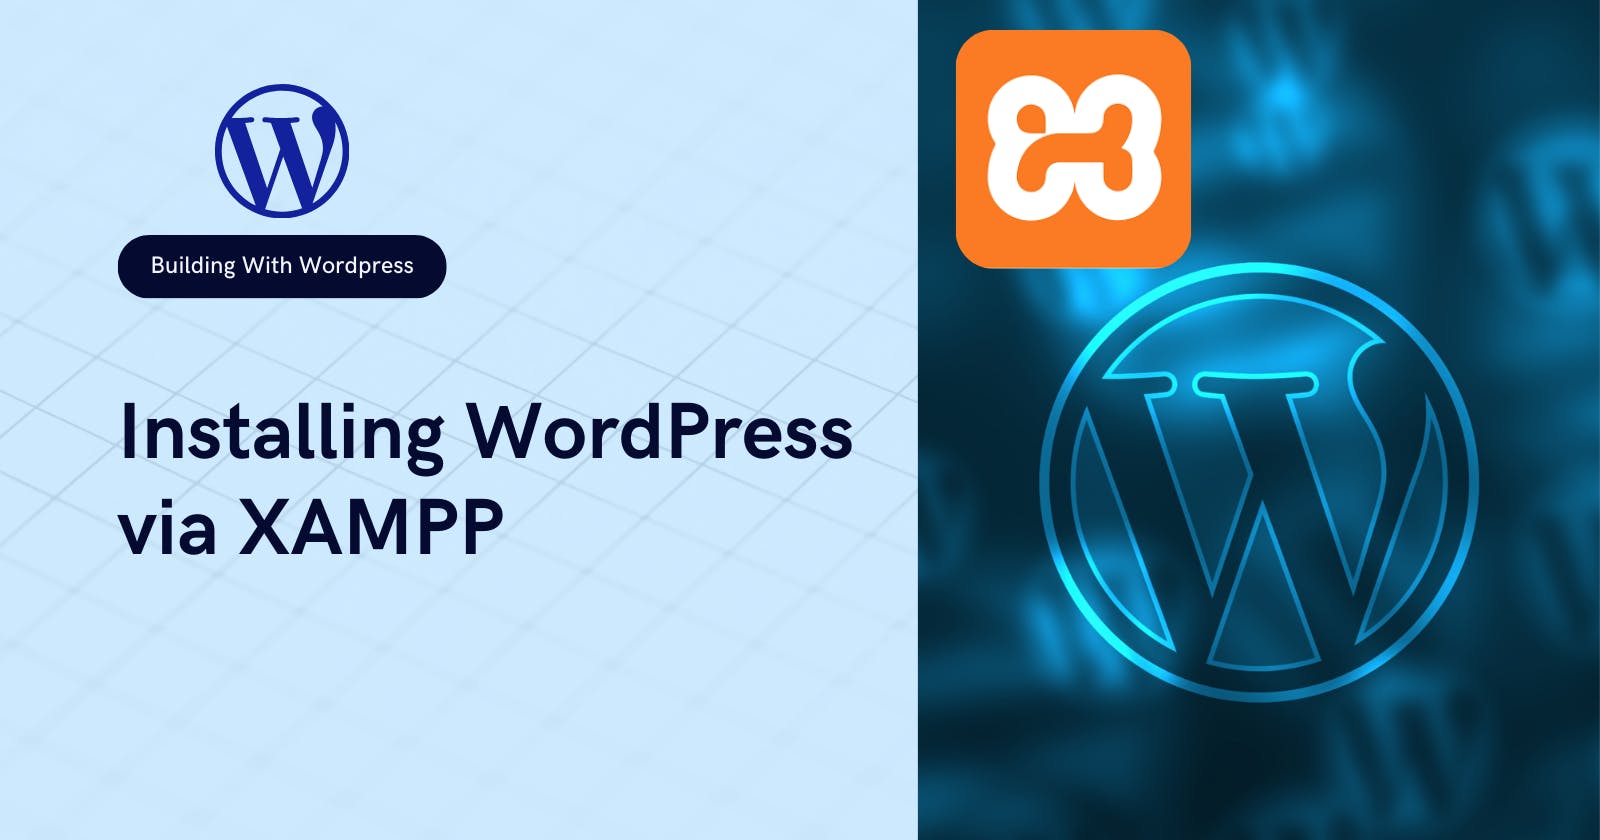 How to Install WordPress via XAMPP